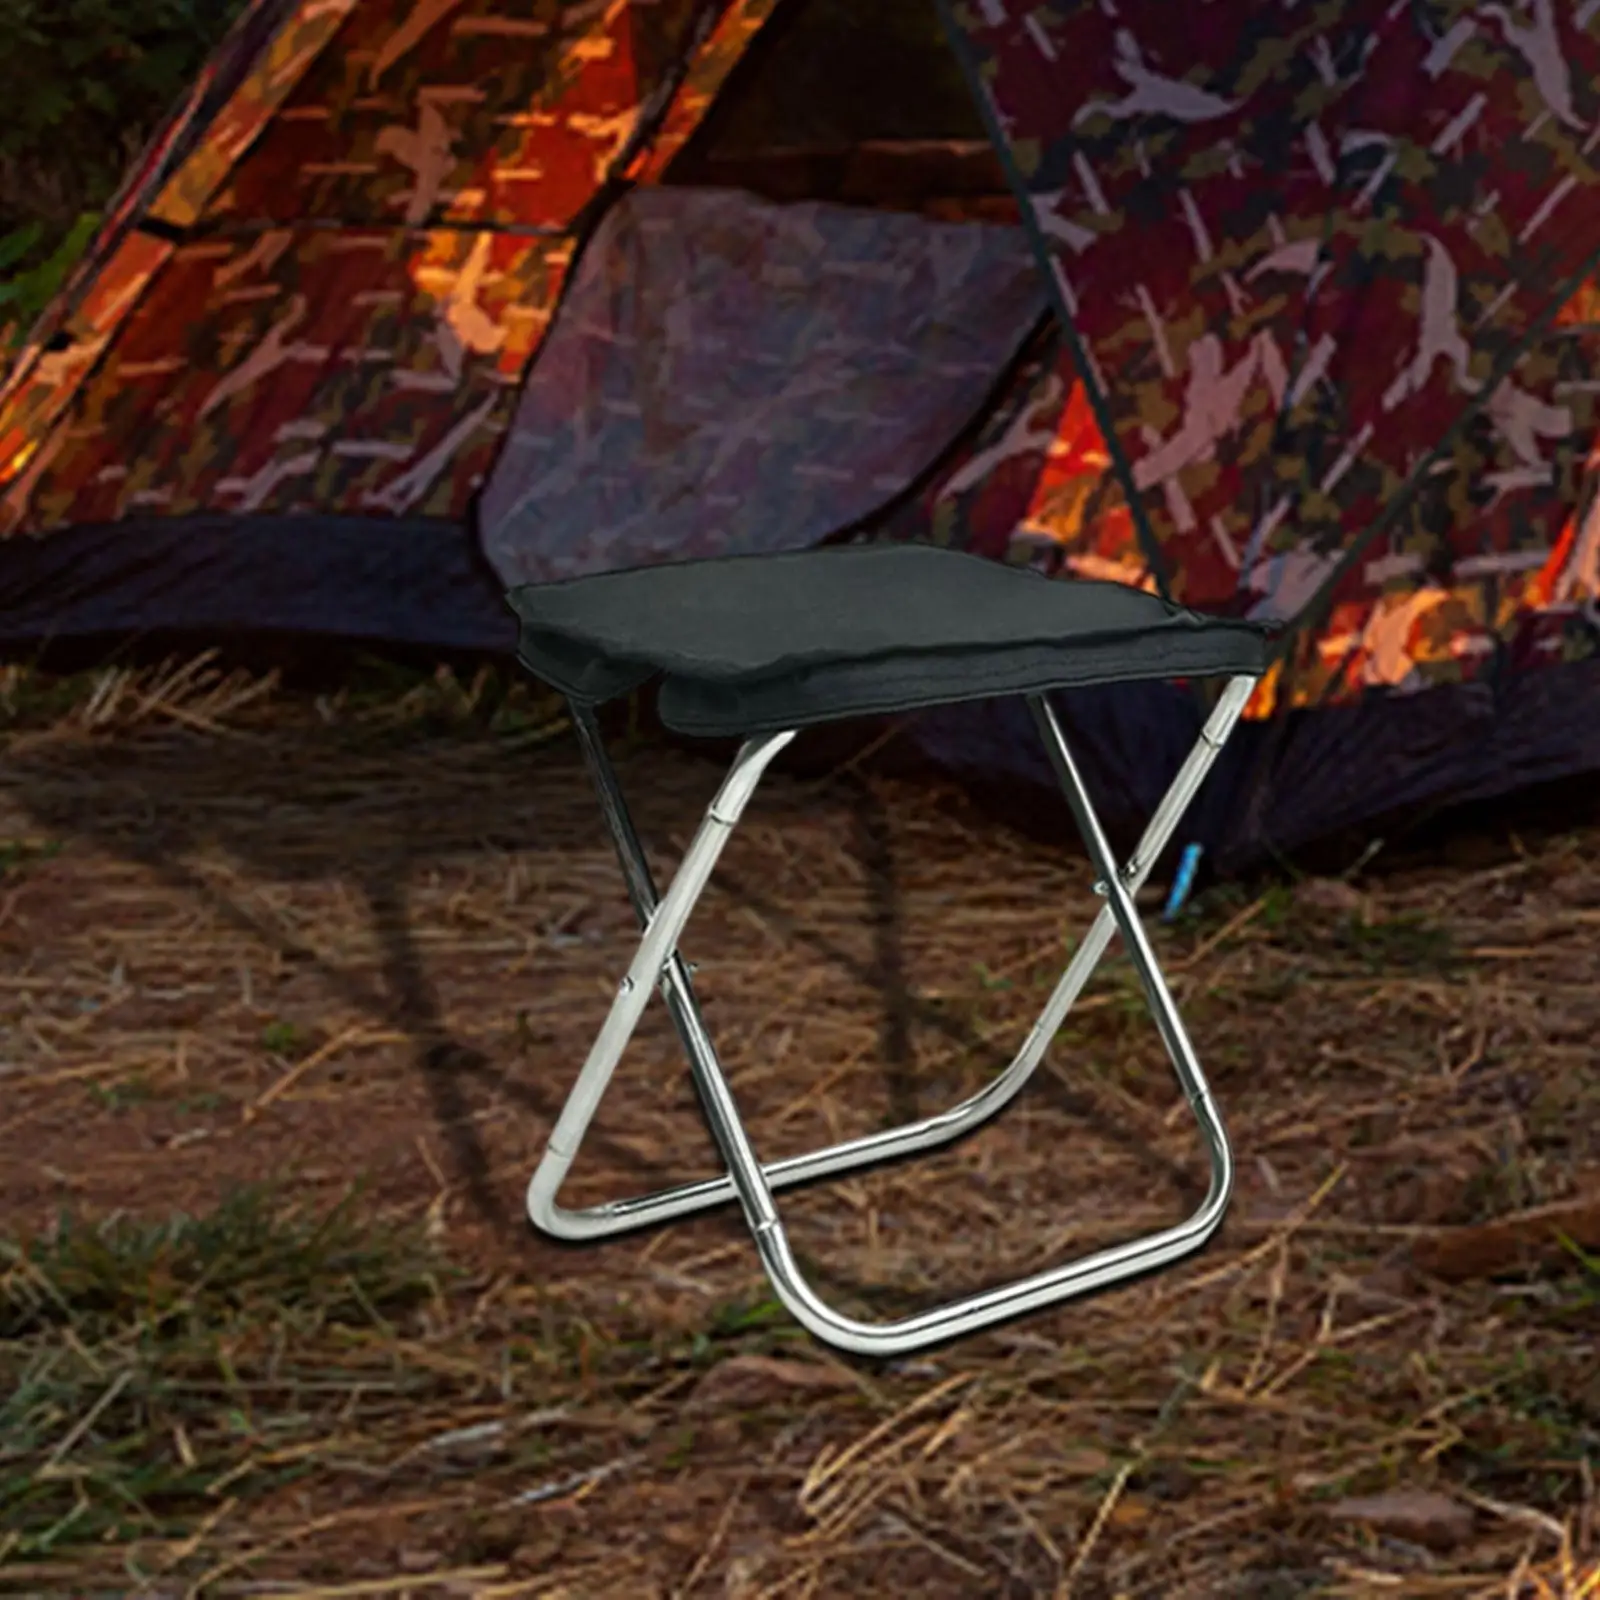 Outdoor Folding Stool Portable Lightweight Mini Size Portable Bench Fishing Chair for Backyard Garden Backpacking Picnic Hiking